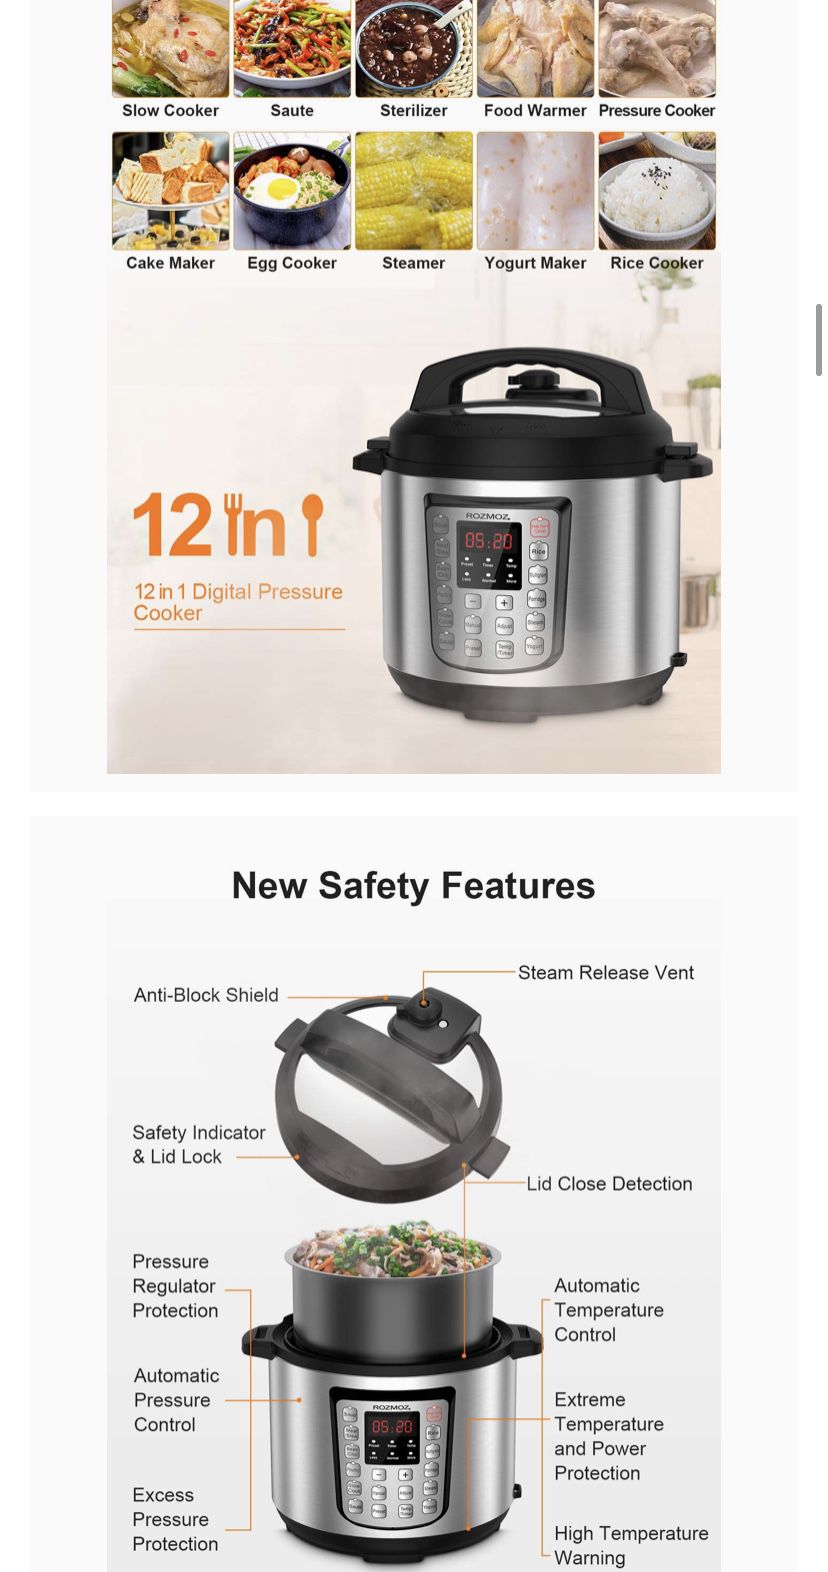 12-in-1 Electric Pressure Cooker Instant Stainless Steel Pot, Slow Cooker, Steamer, Saute, Yogurt Maker, Egg Cook, Sterilizer, Warmer, Rice Cooker wi